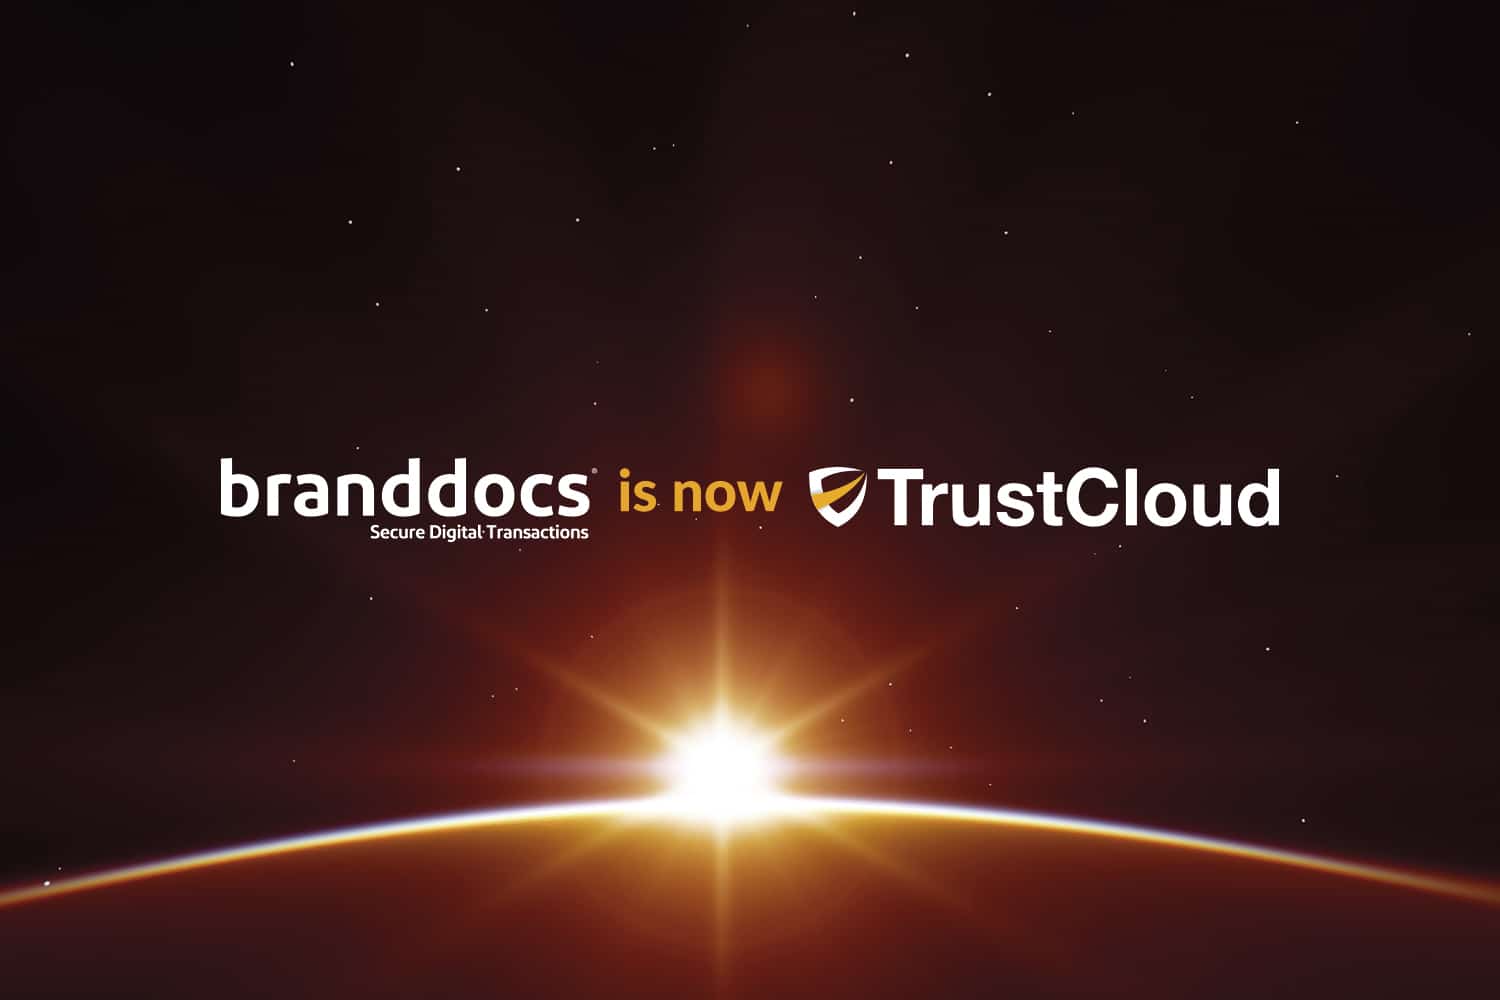 Branddocs is now TrustCloud